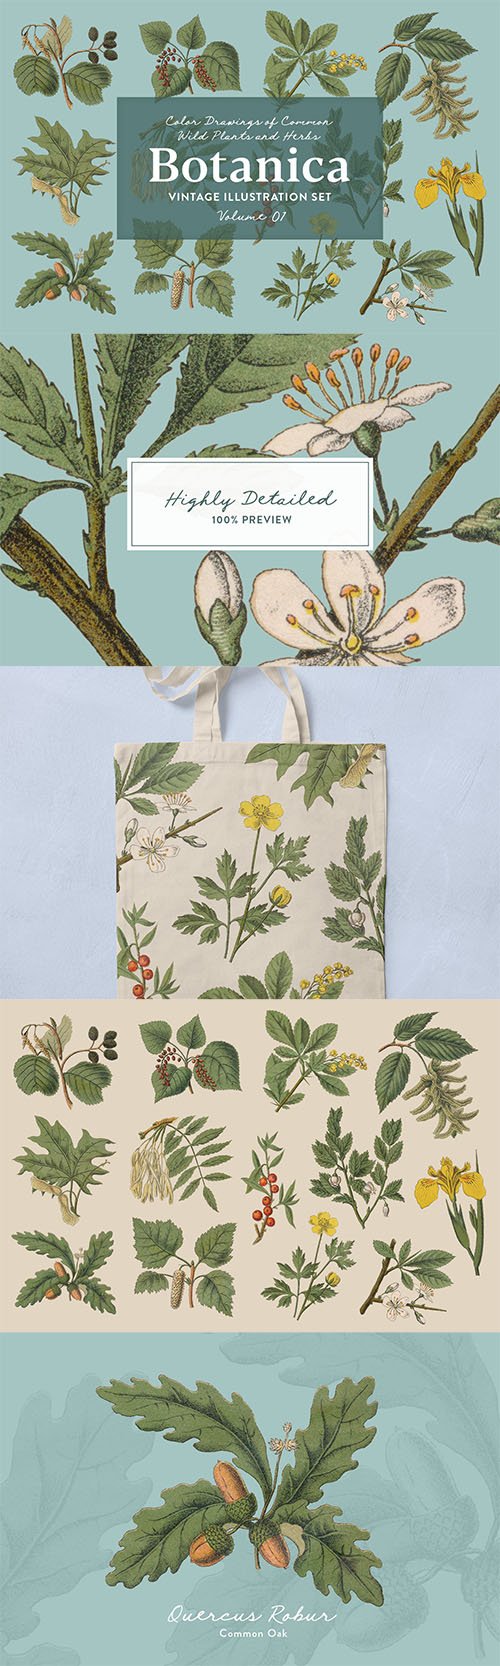 Botanica Vol. 1 - Vintage Plants Illustrations